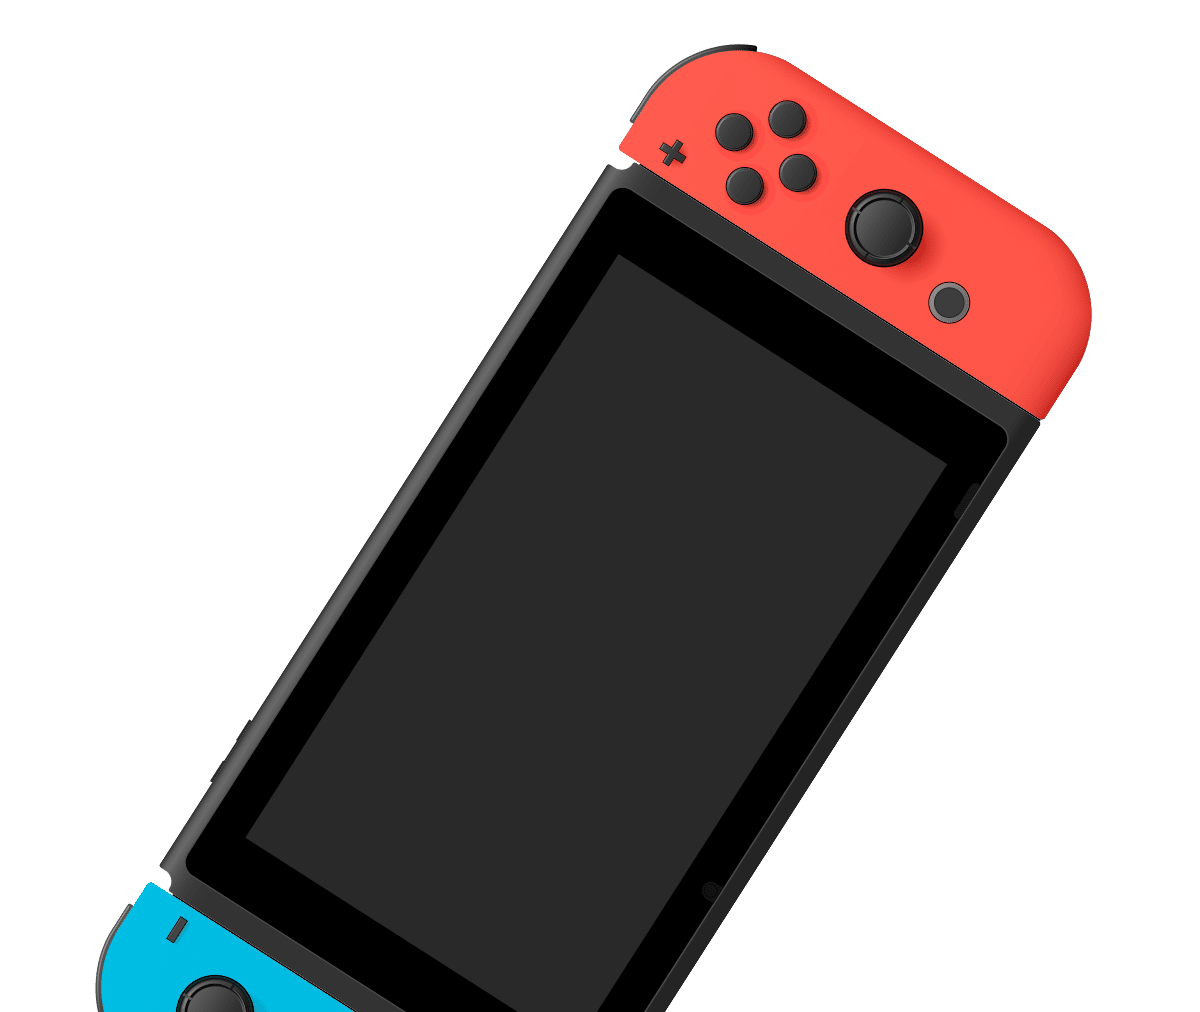 Nintendo-switch-cybertown-reparación-de-computadoras-reparación-de-consolas-de-videojuegos-reparación-de-celulares-cdmx